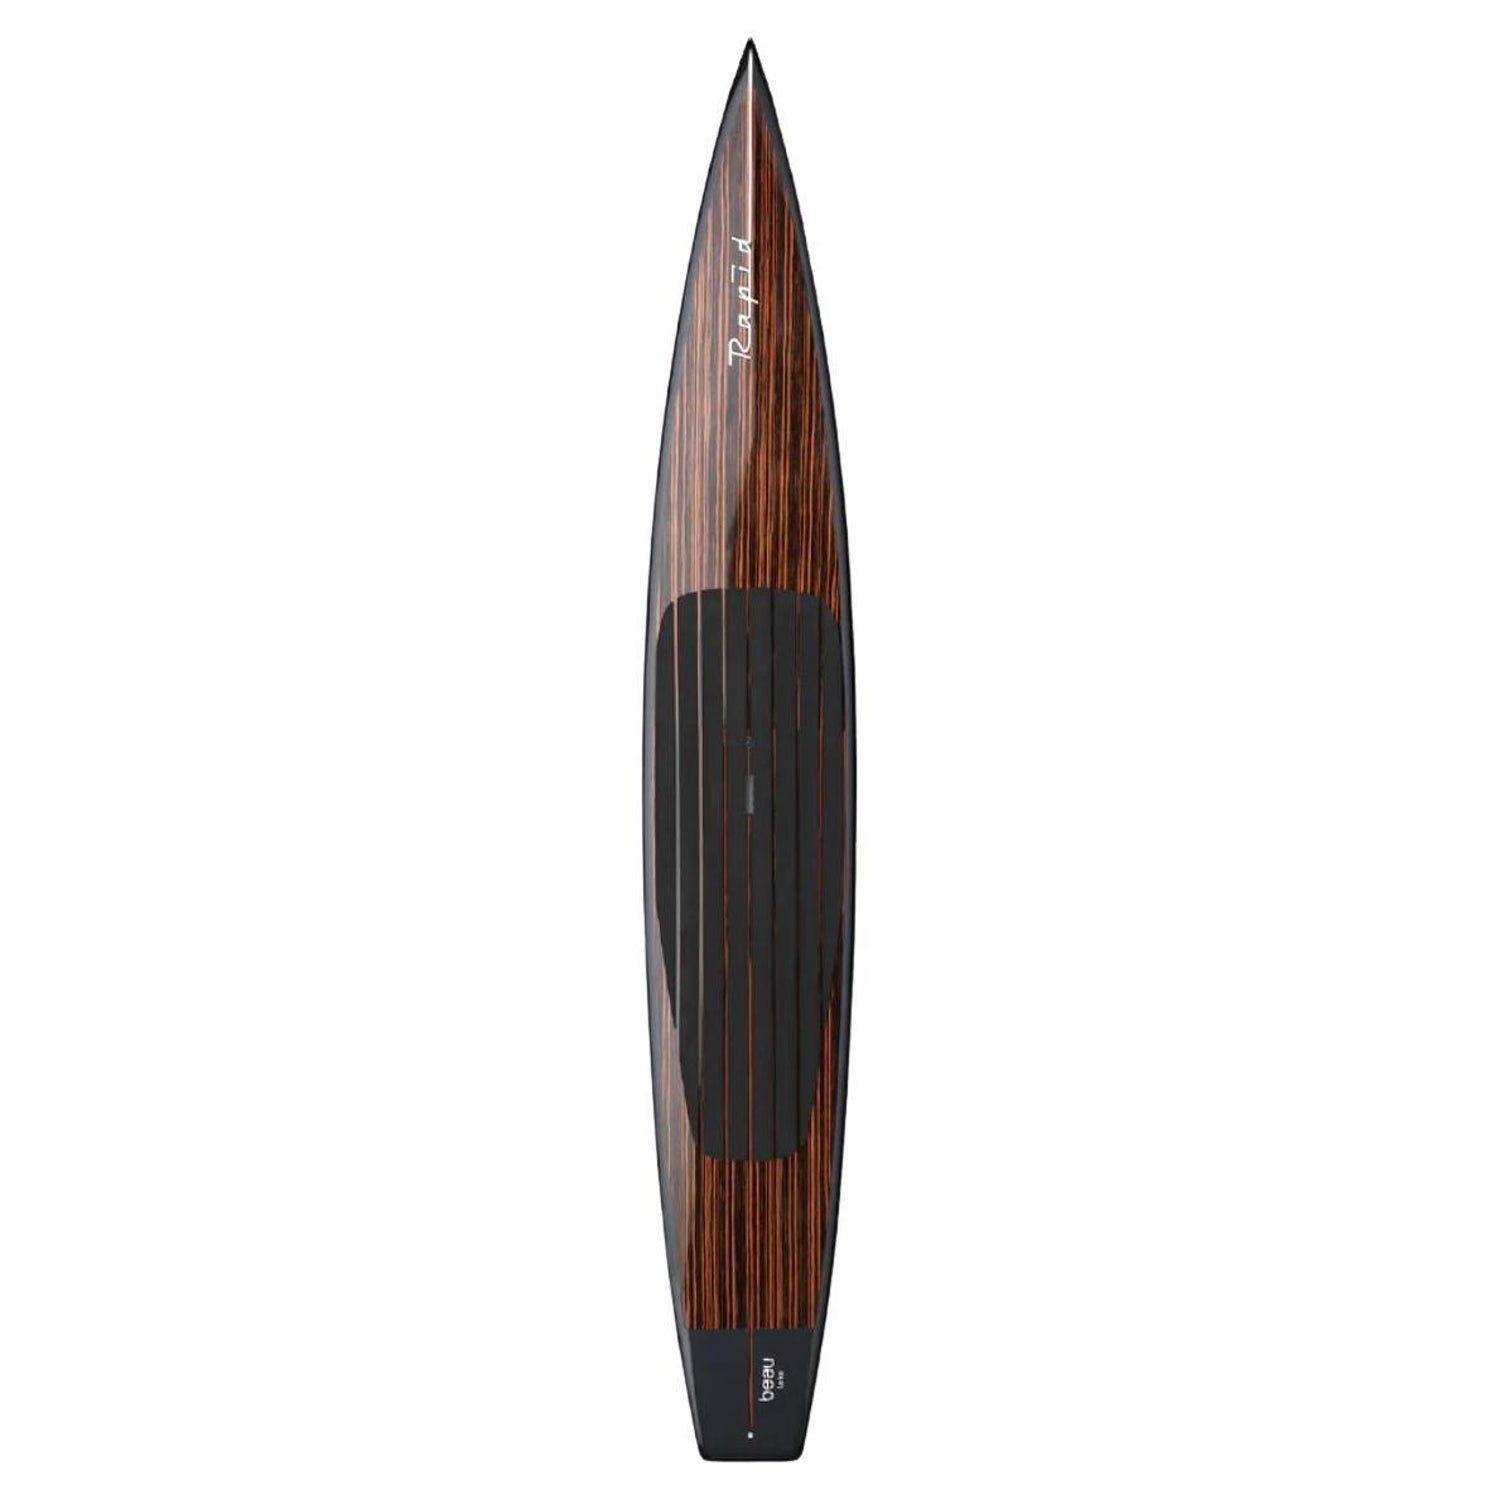 https://a.1stdibscdn.com/carbon-fiber-polished-wood-paddle-board-by-beau-lake-for-sale/f_95902/f_384831721711381326730/f_38483172_1711381326970_bg_processed.jpg?width=1500